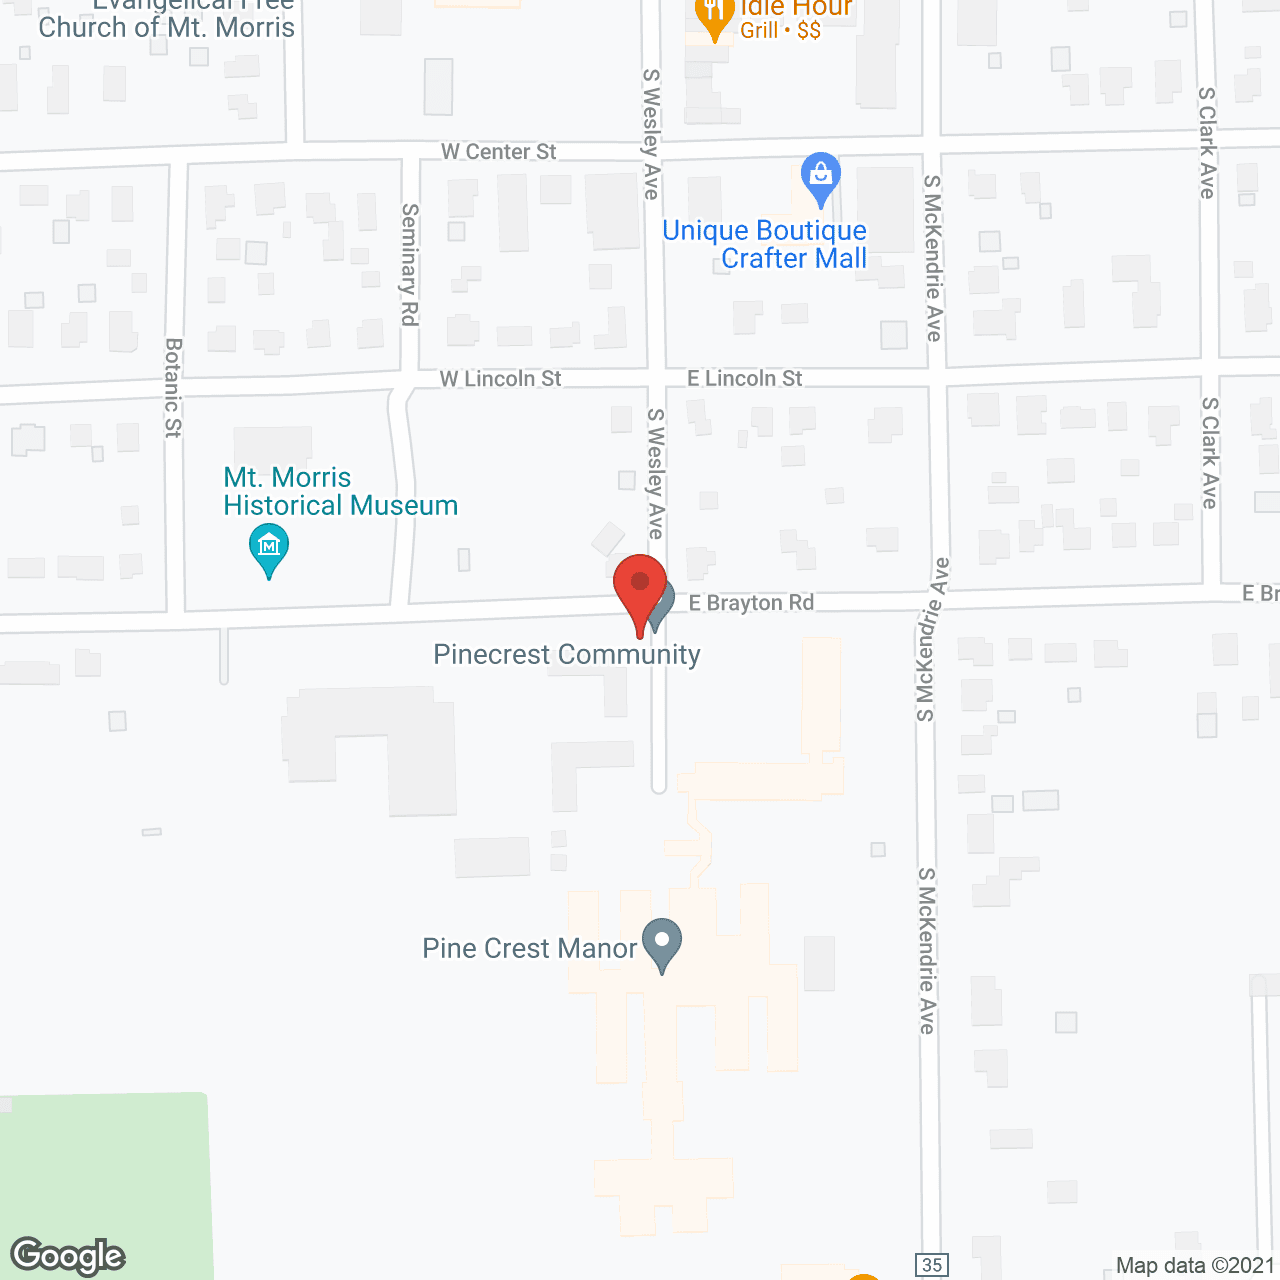 Pinecrest Community in google map